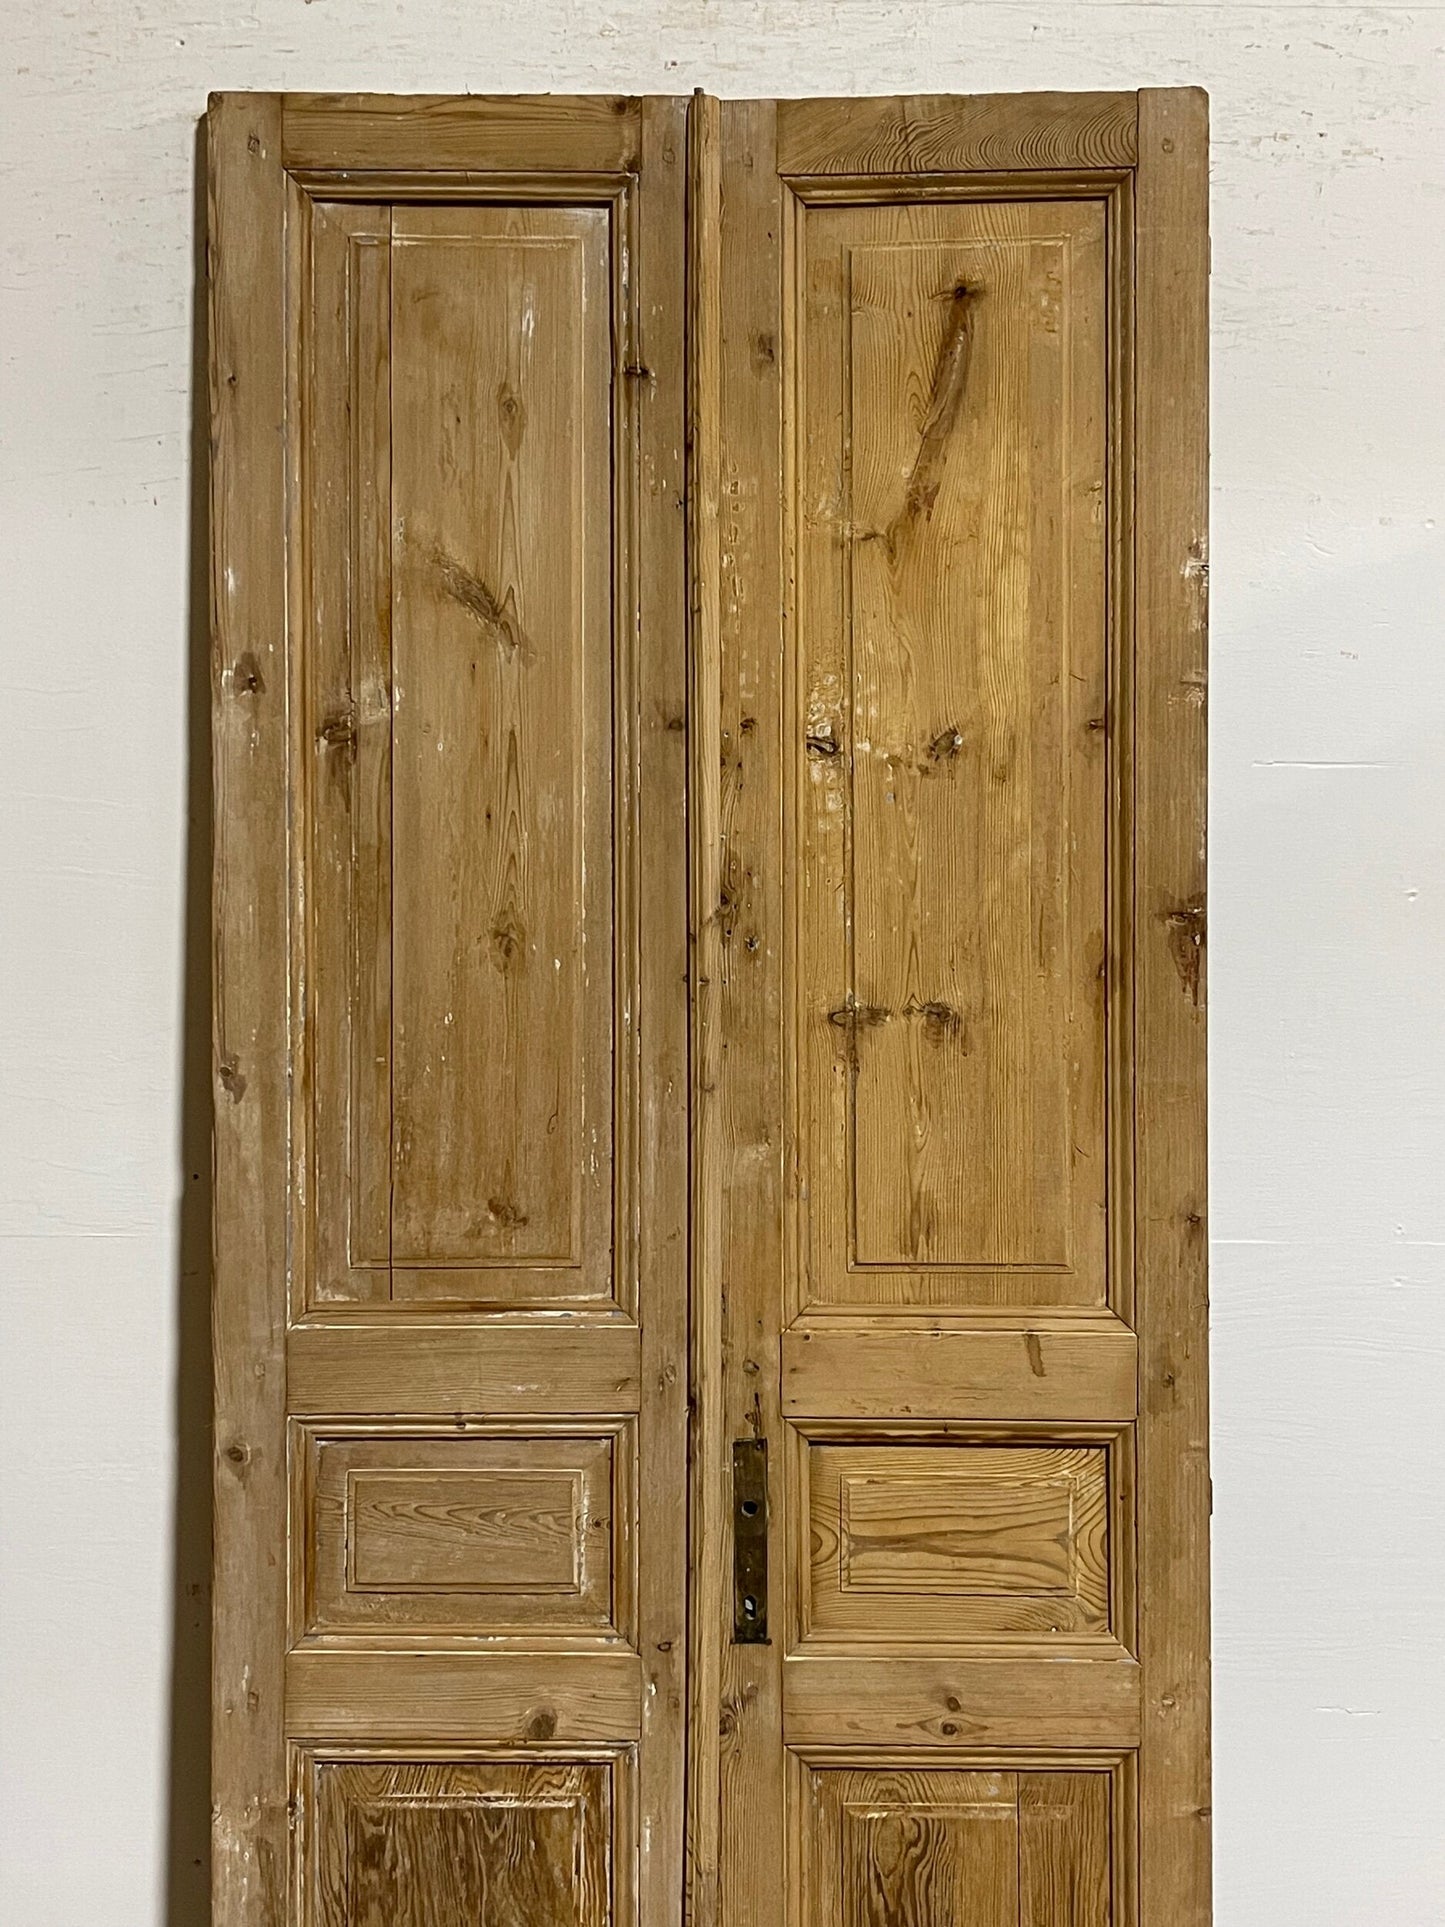 Antique French panel doors (92 x 38) I041